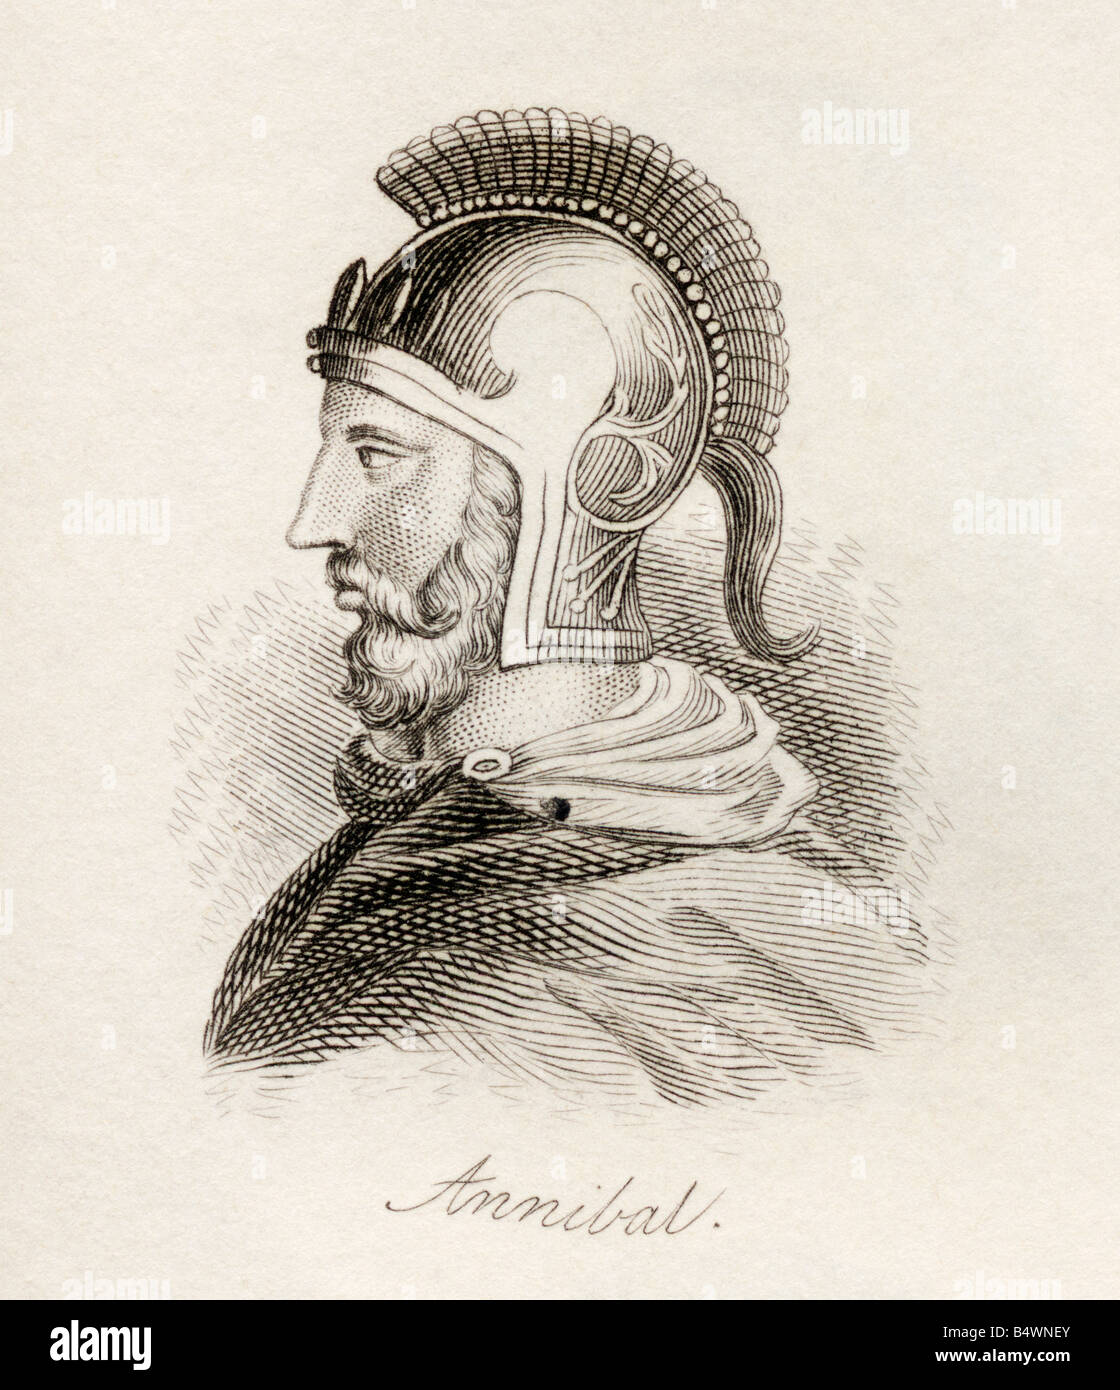 Hannibal der große, 247 v. Chr. - ca. 183 v. Chr. Karthagischer Militärkommandeur und Taktiker. Stockfoto